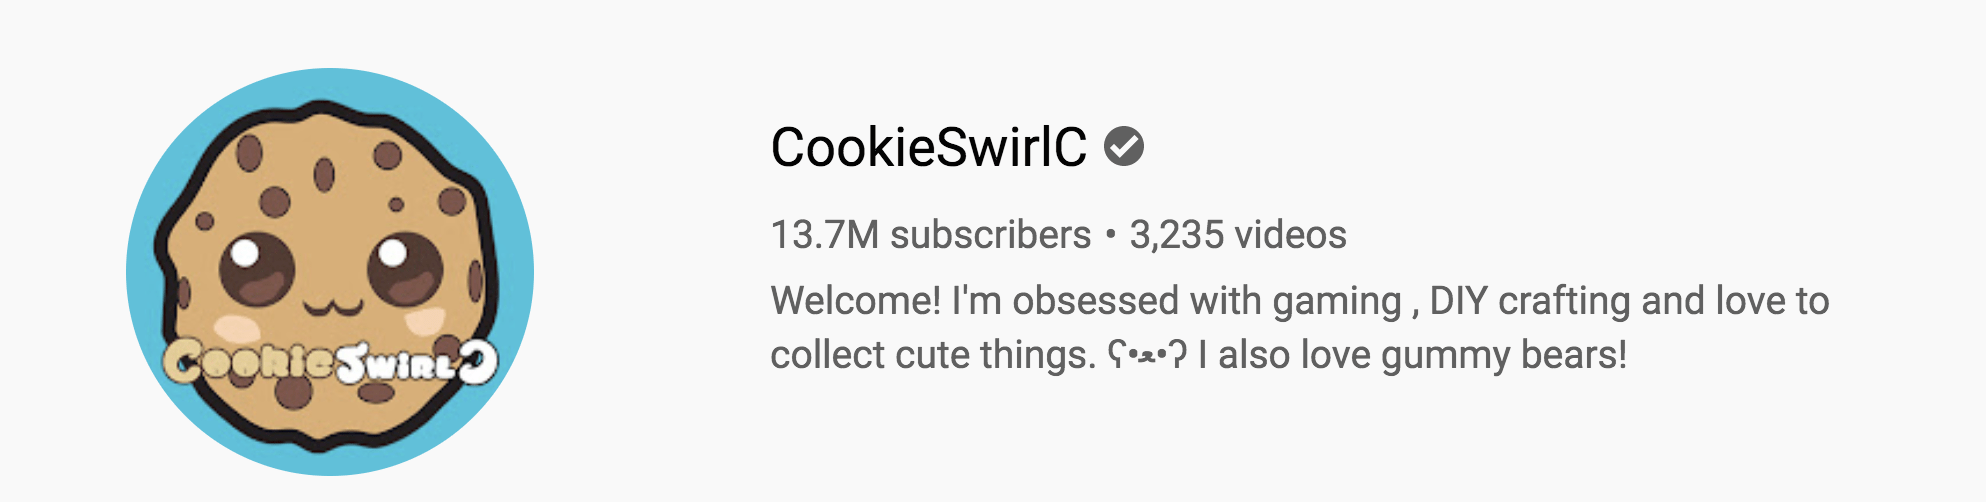 Top Youtube Gaming Influencers - CookieSwirlC